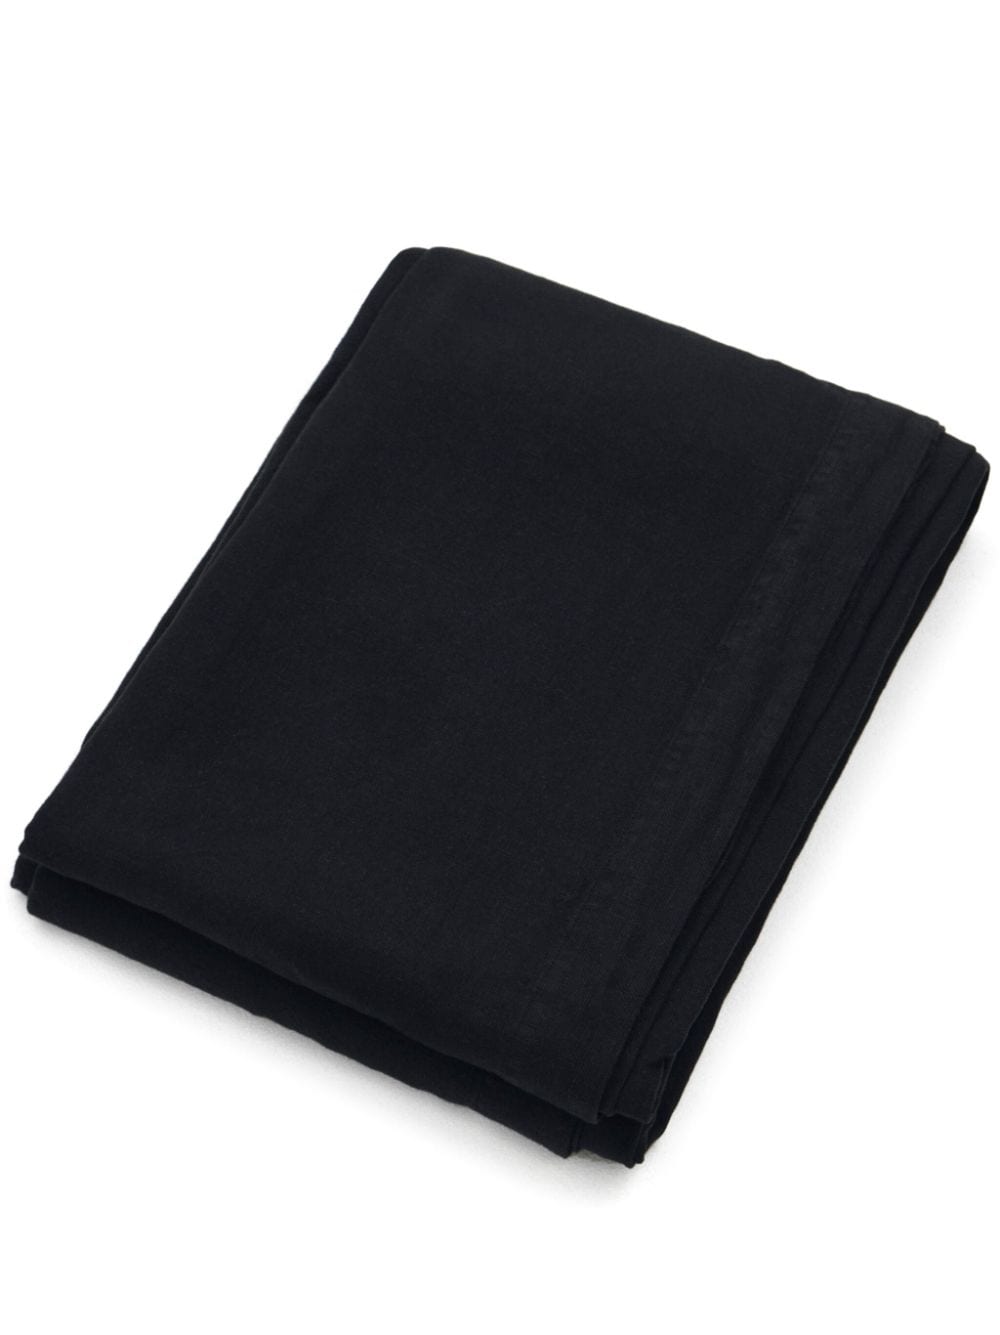 Tekla Stonewashed Linen Bedspread (240x260cm) In Black